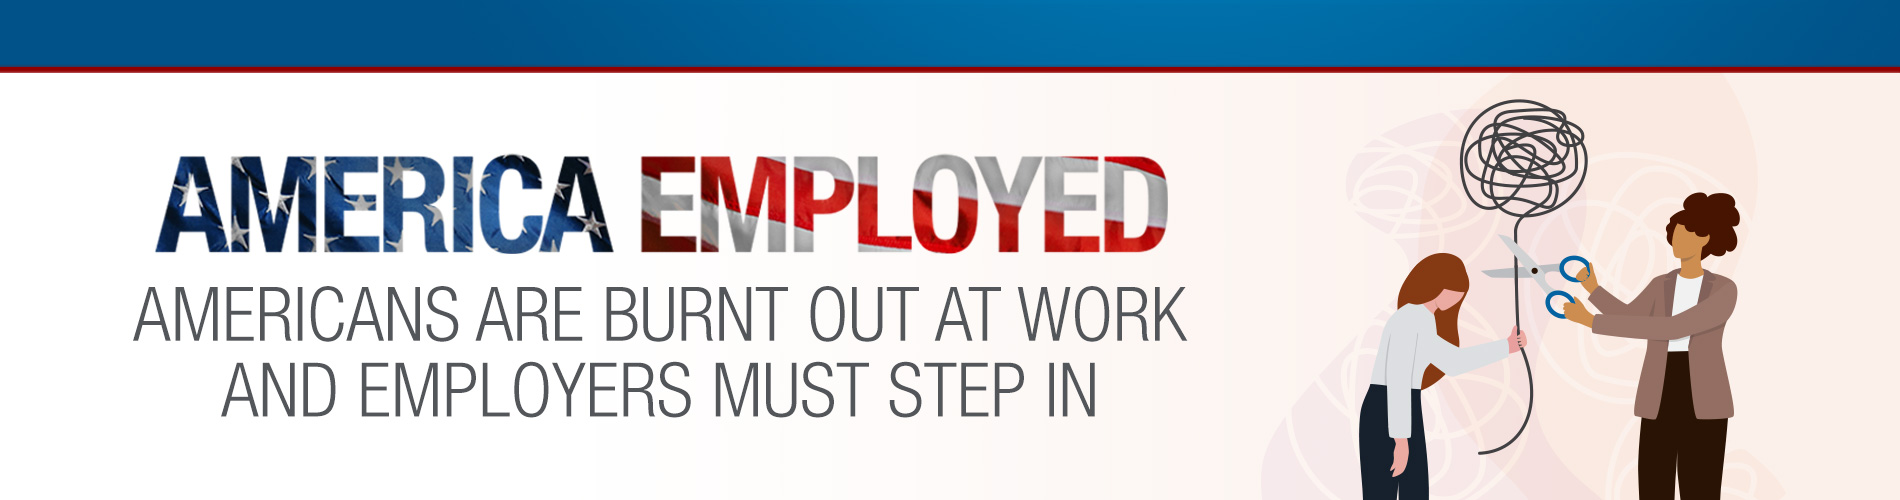 Employee Burnout - America Employed